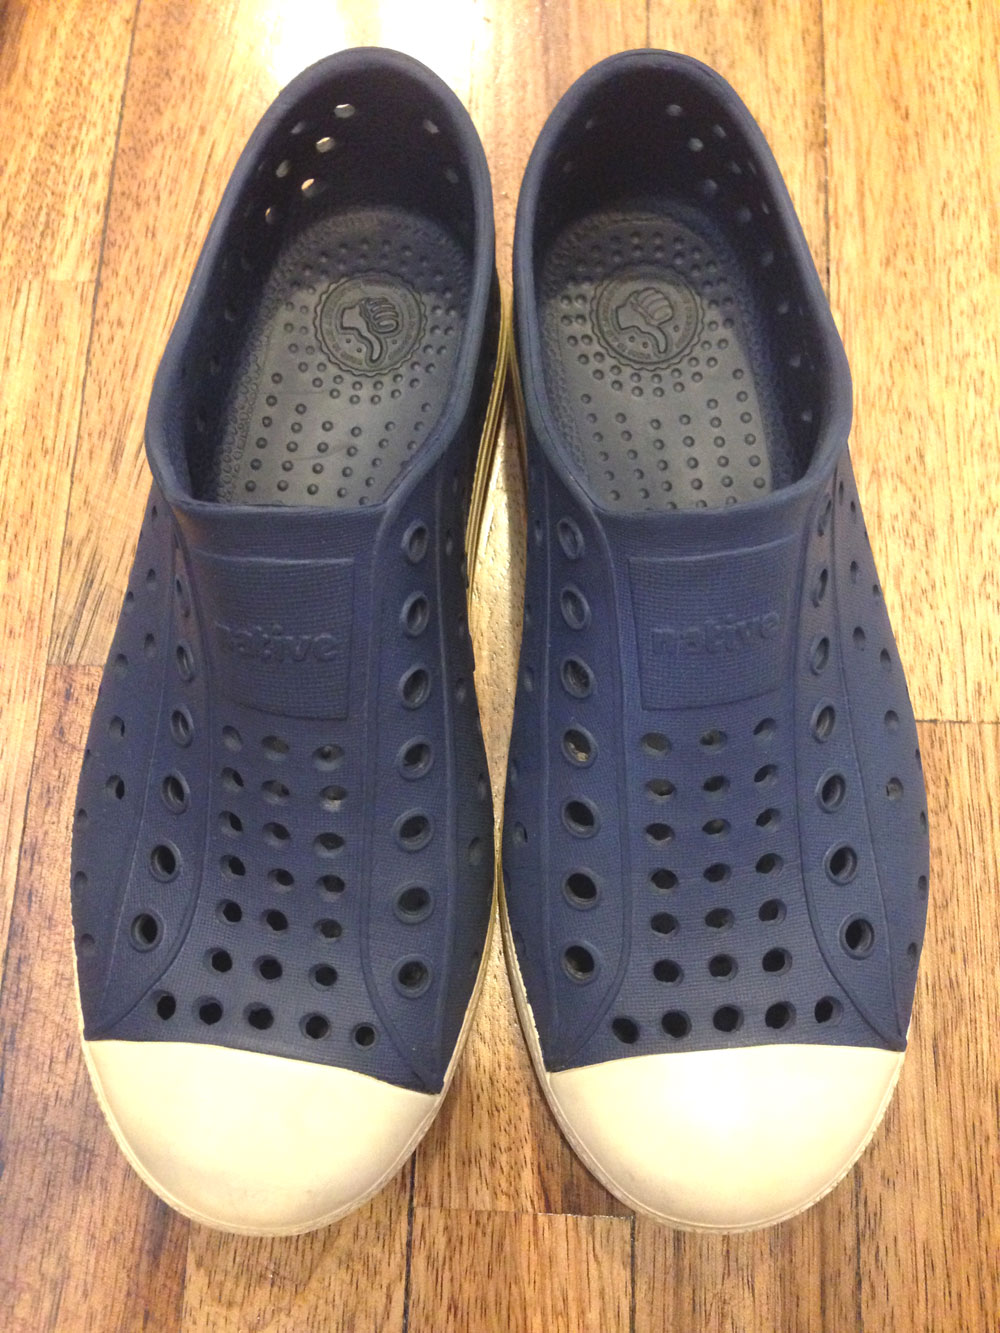 Used - ของแท้ รองเท้าคัชชูเด็กผู้ชายยี่ห้อเนทีฟ JEFFERSON CHILD by Native สีน้ำเงิน size J1 สภาพดี คู่นี้ไม่มีกล่อง ส่งฟรีลงทะเบียน รูปที่ 1